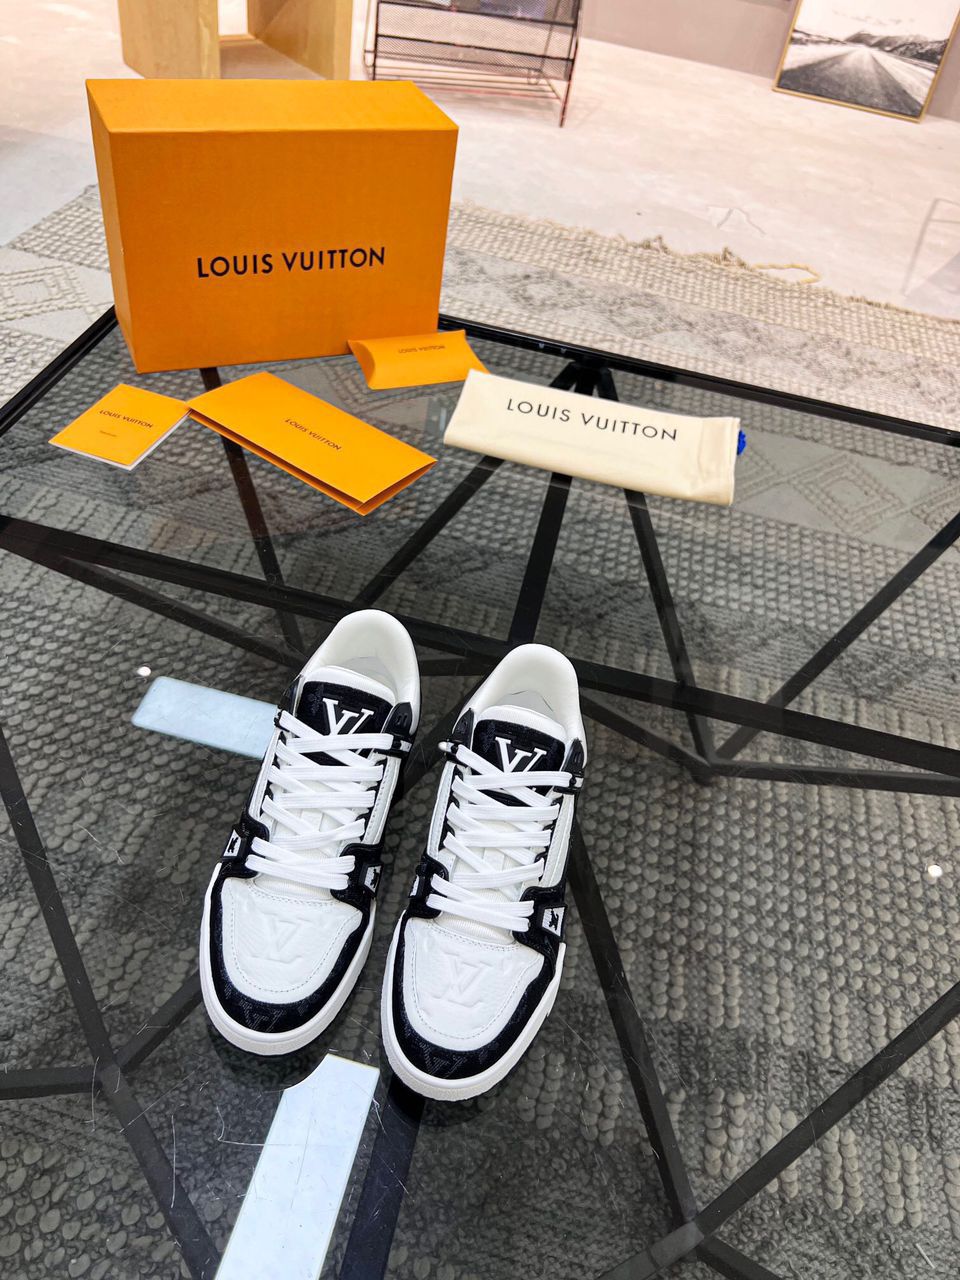 Louis Vuitton Trainer for Sale in Milton, WA - OfferUp